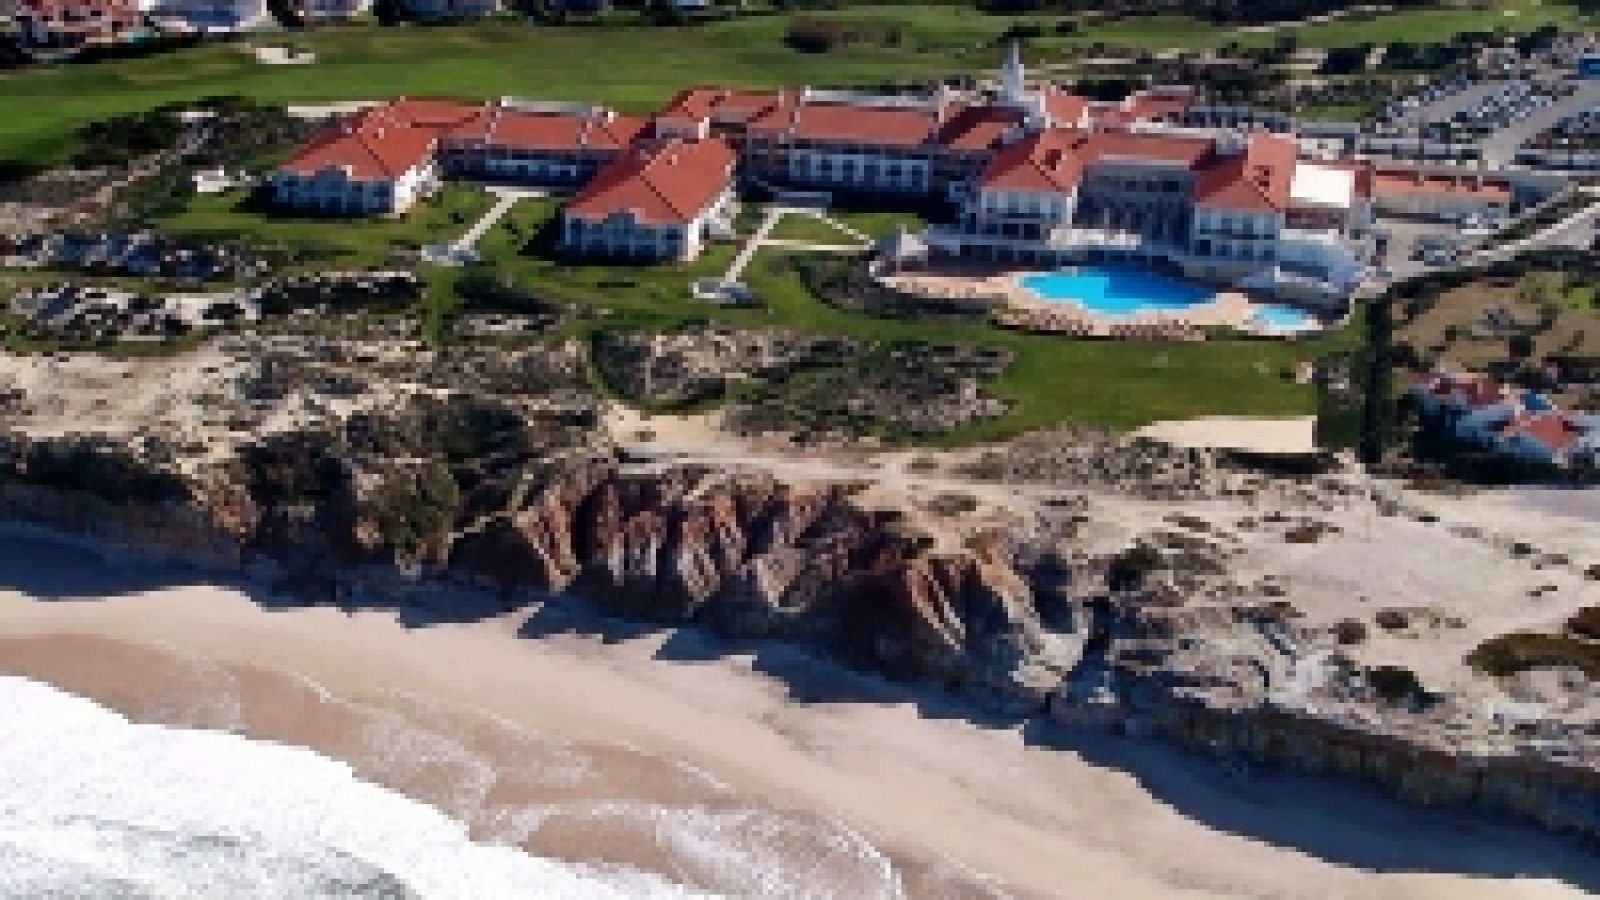 Praia D'El Rey Golf and Beach Resort - Portugal golf packages